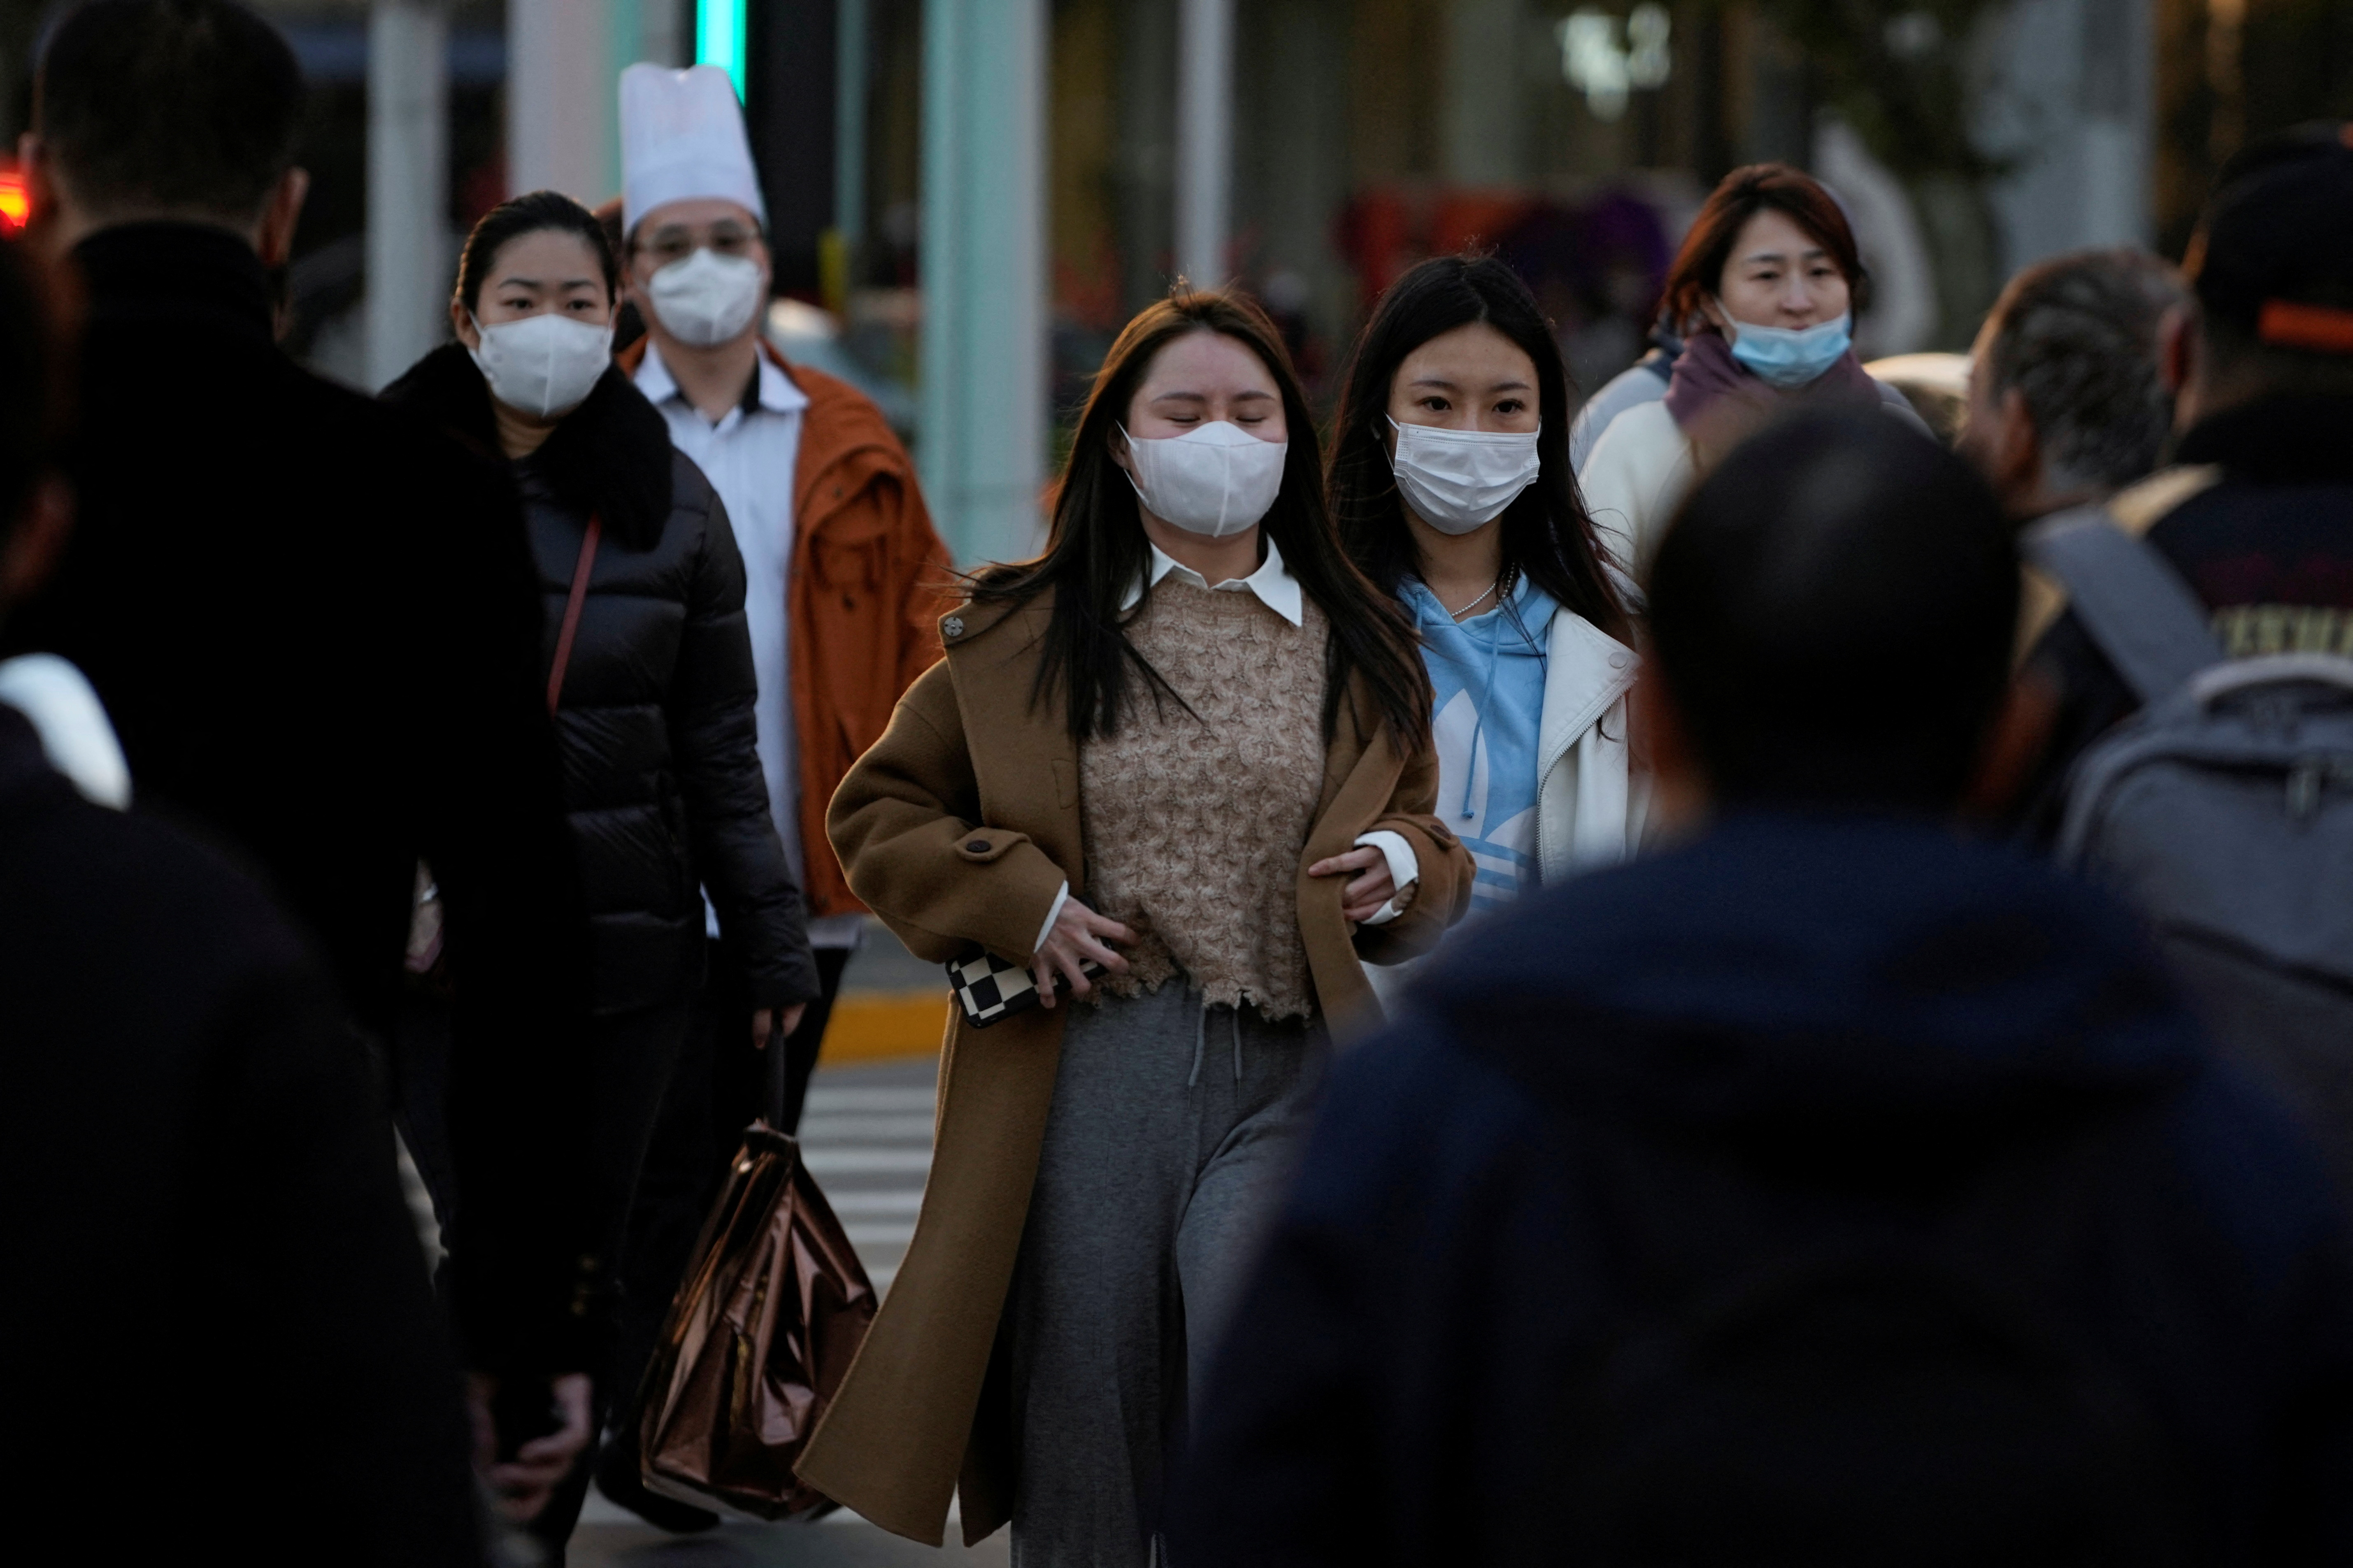 People wearing masks cross a street, as coronavirus disease (COVID-19) outbreaks continue in Shanghai